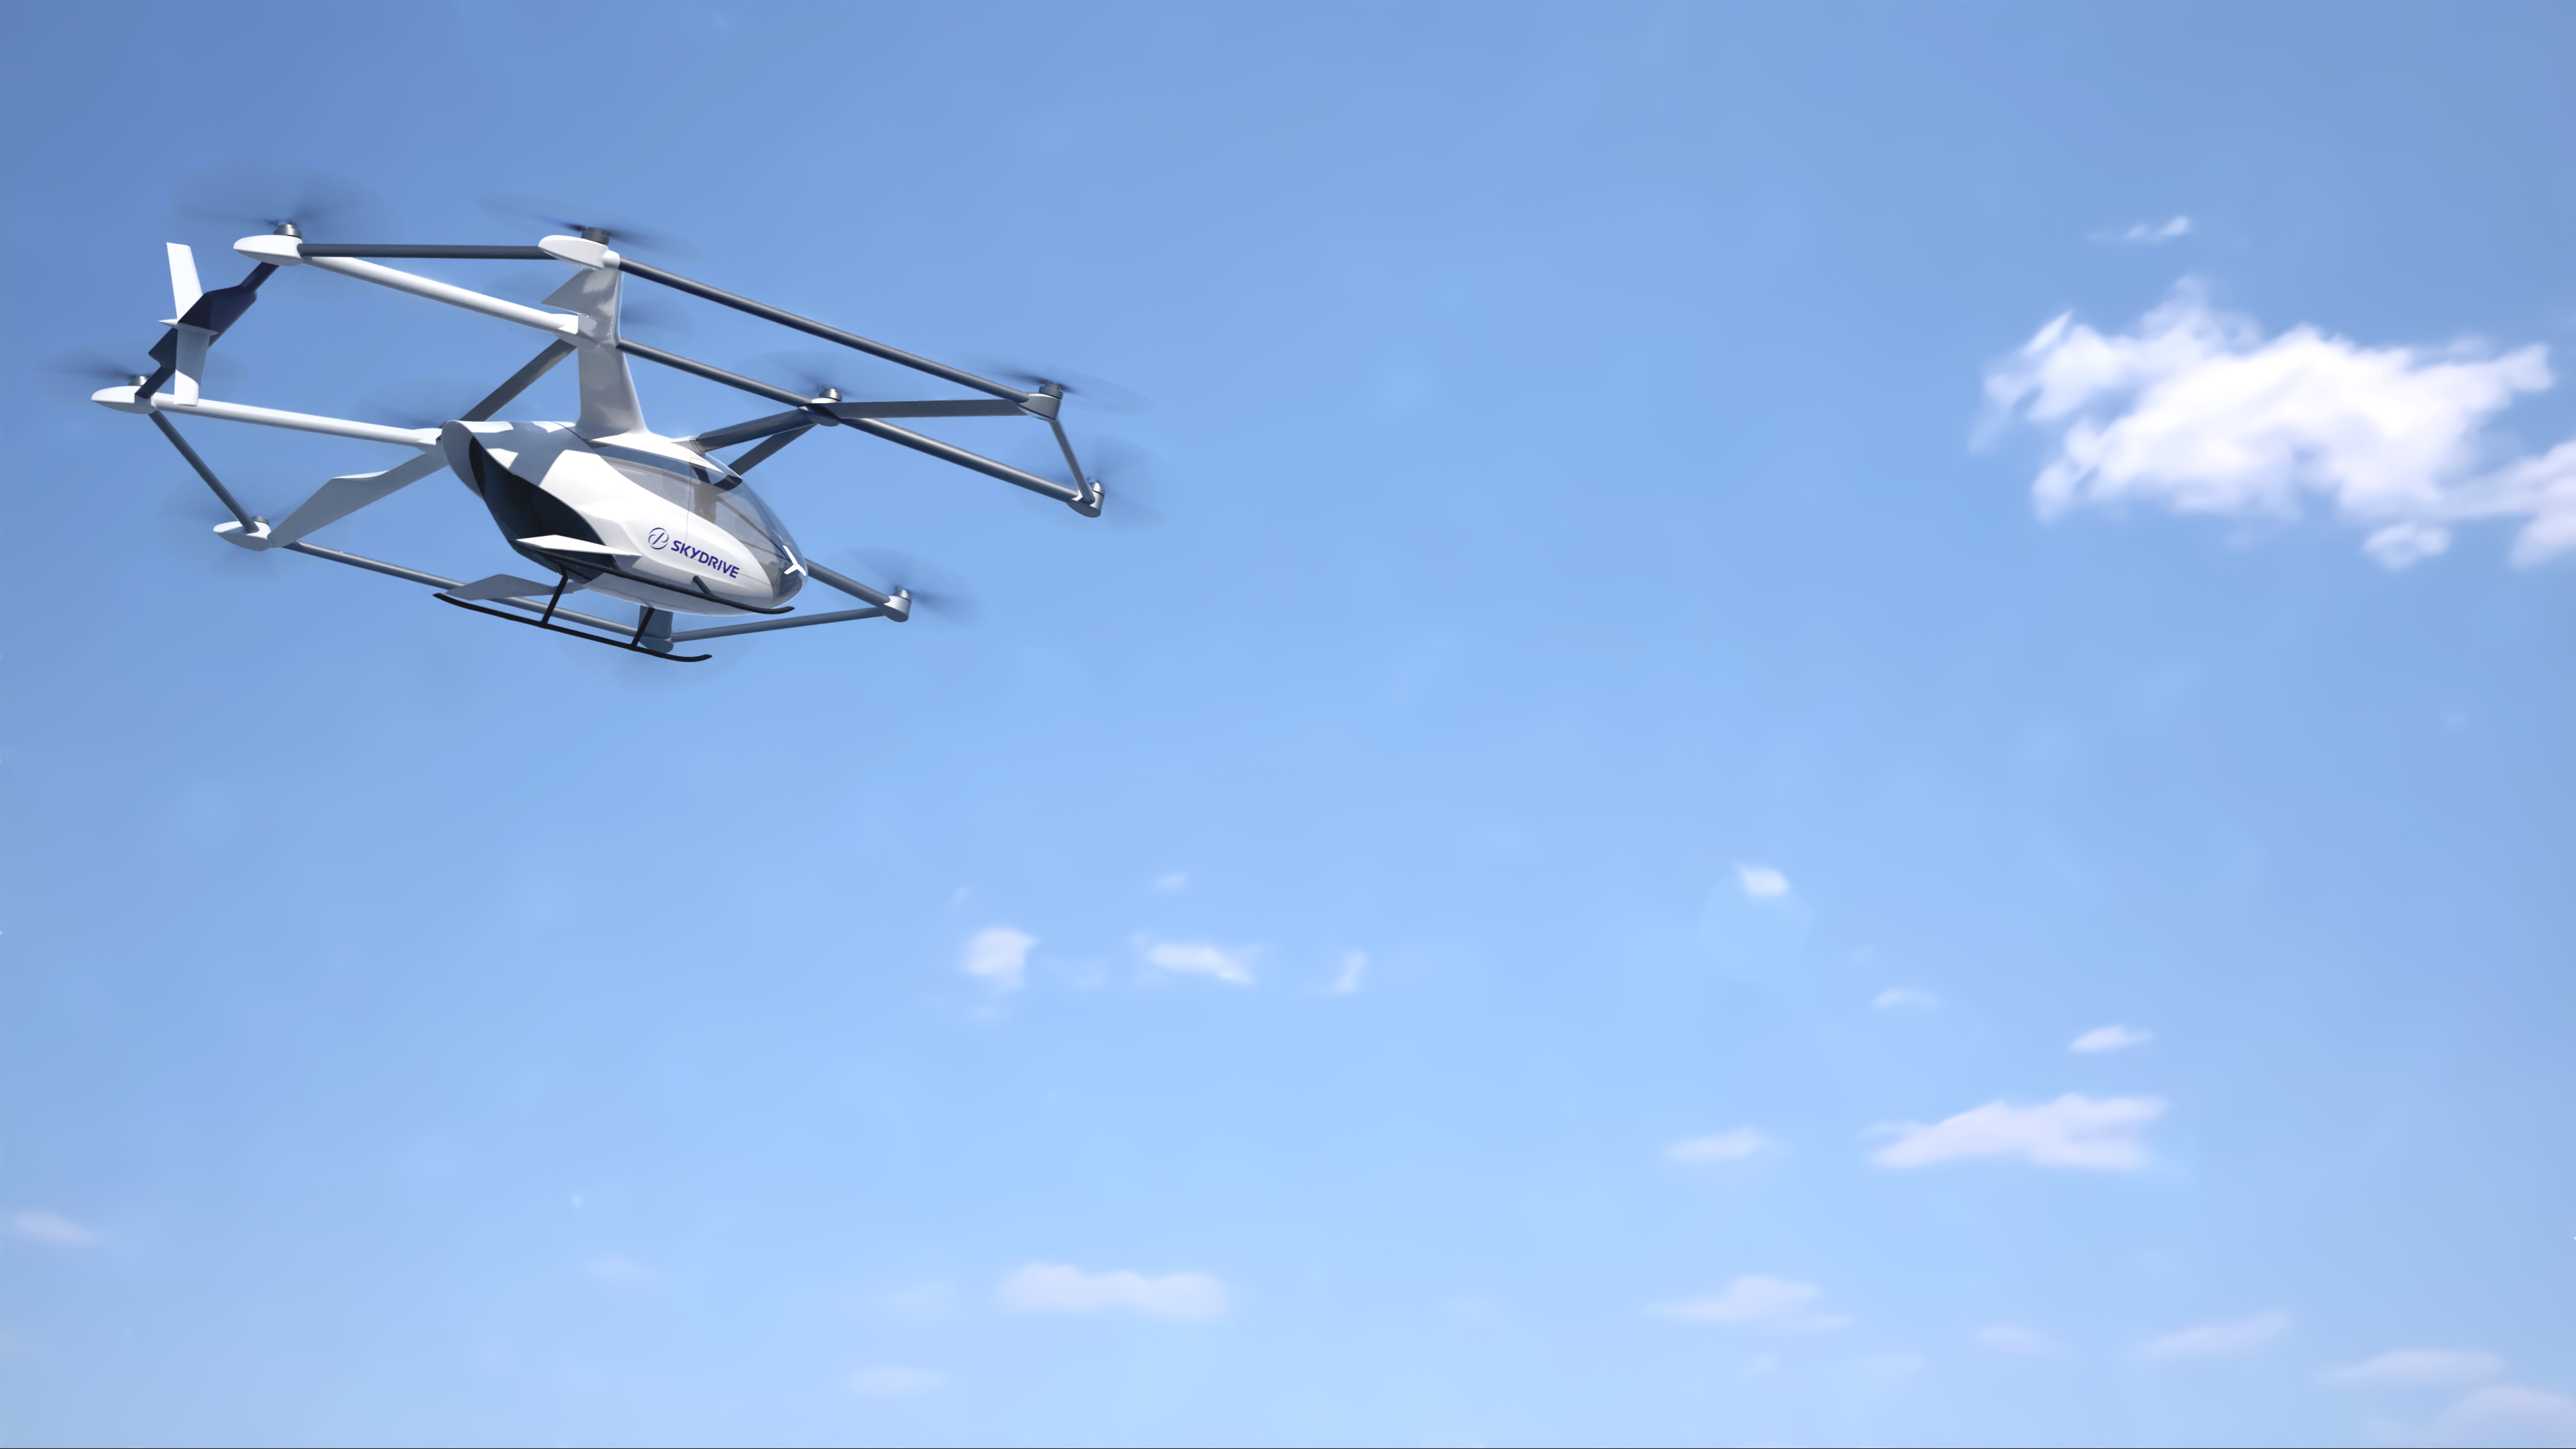 「SKYDRIVE」が空を飛ぶイメージ(株式会社SkyDrive提供)